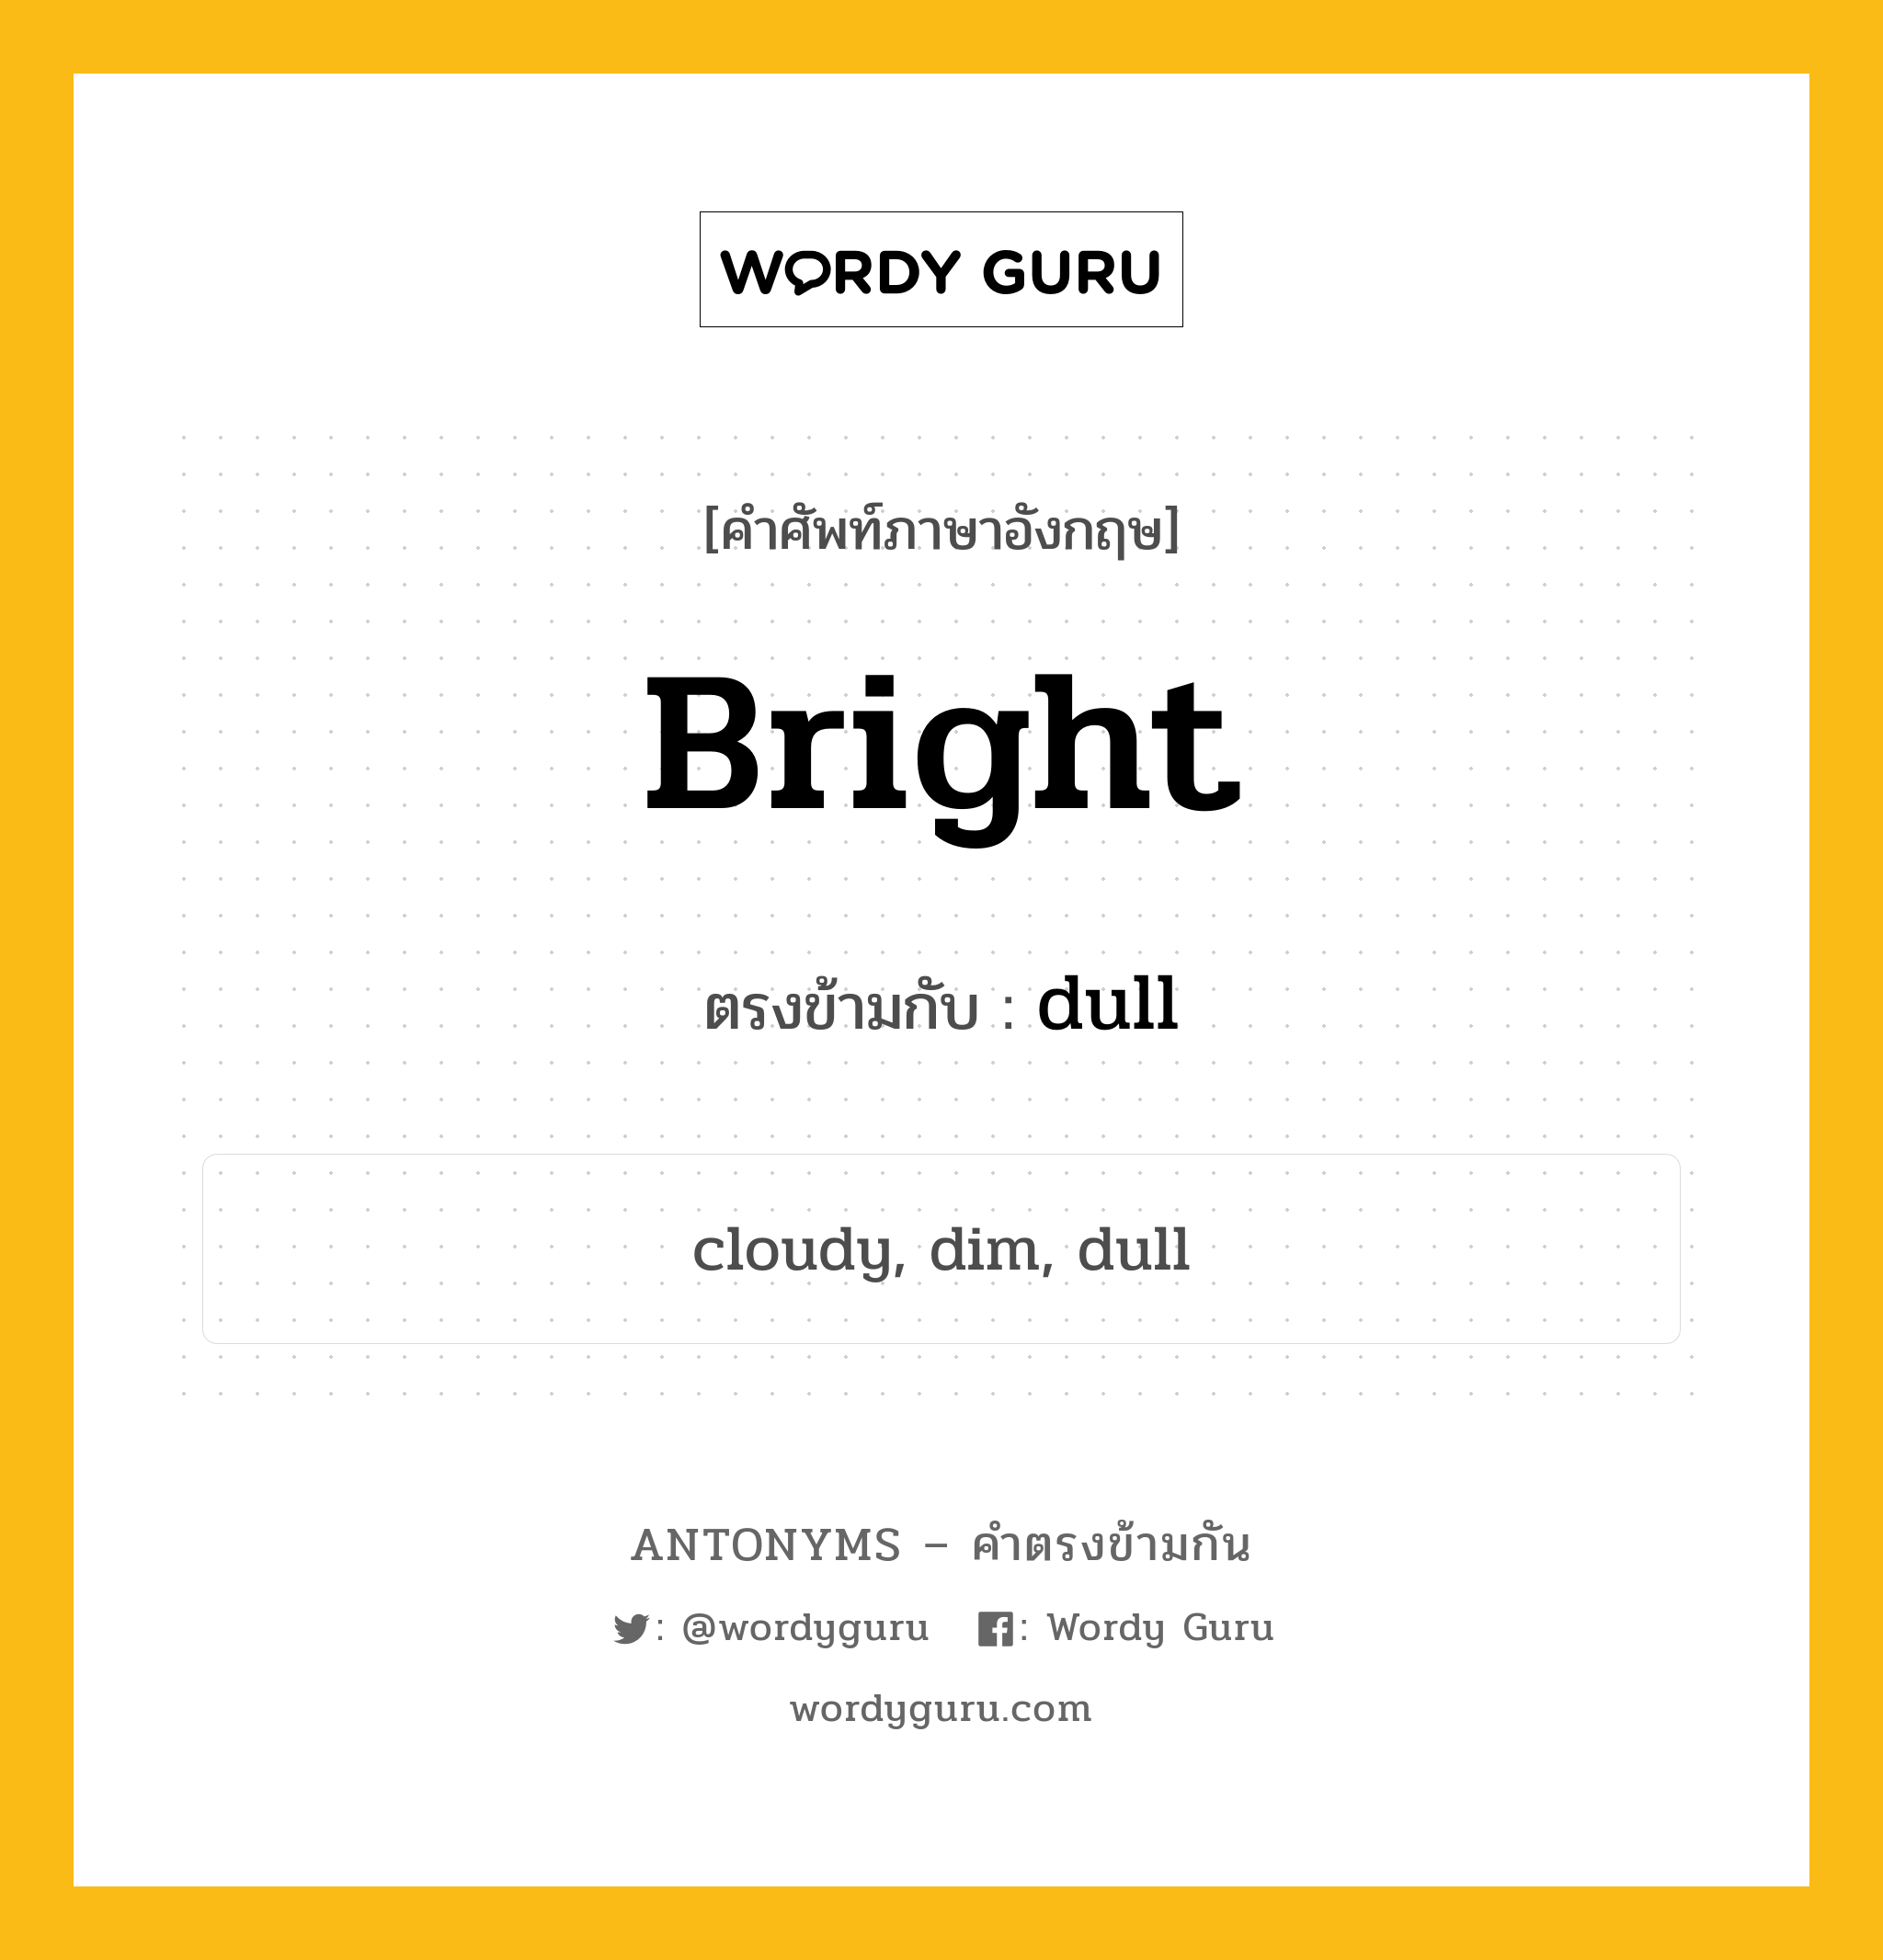 bright เป็นคำตรงข้ามกับคำไหนบ้าง?, คำศัพท์ภาษาอังกฤษ bright ตรงข้ามกับ dull หมวด dull